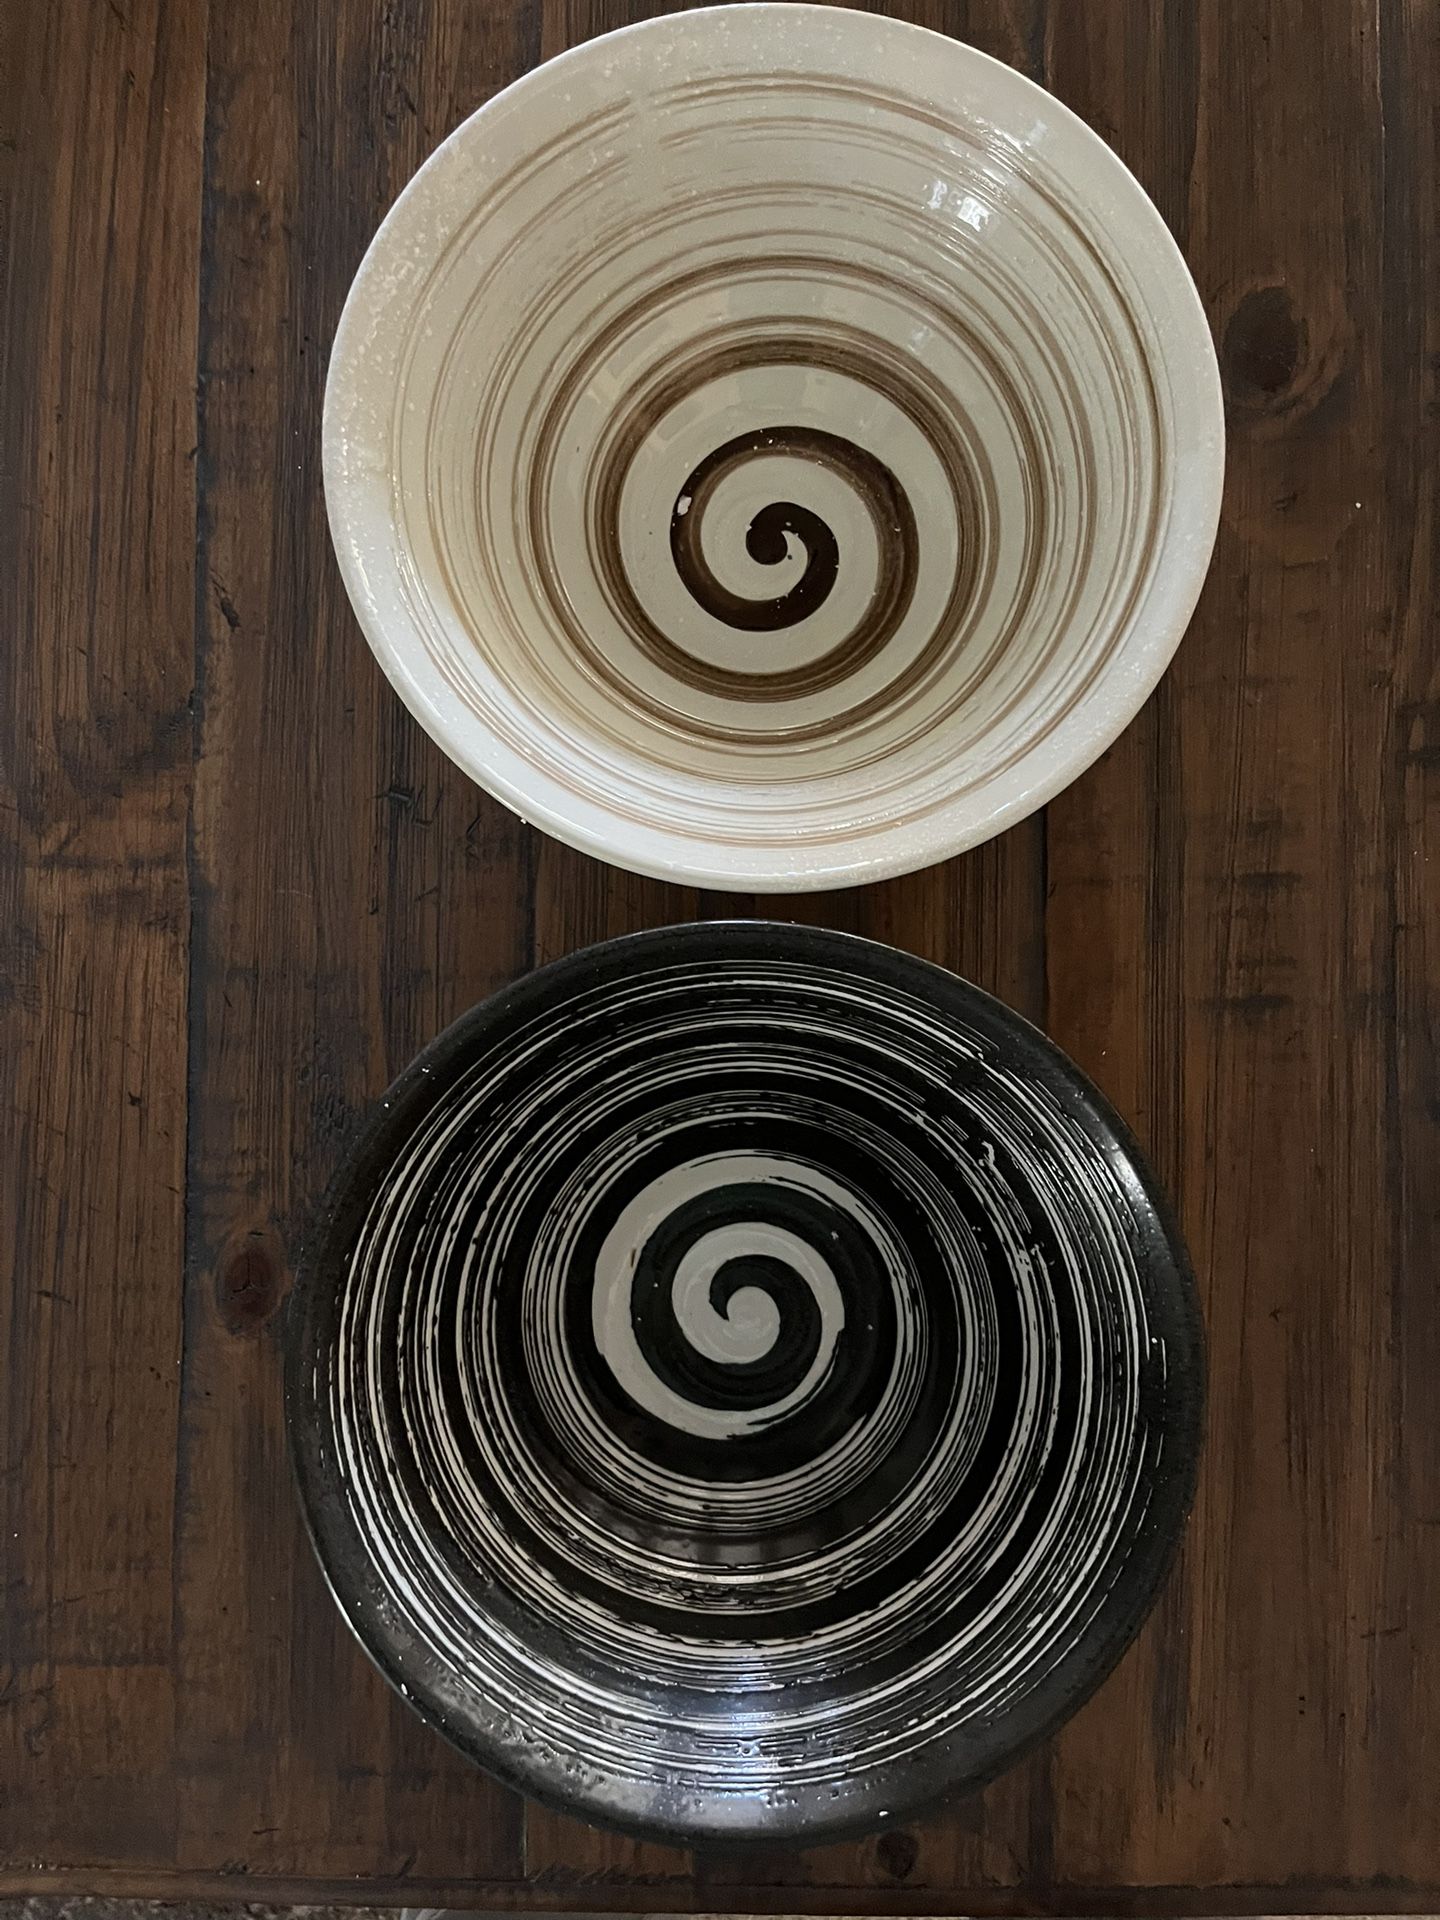 Ceramic Japanese Ramen Bowl Set, 50oz Large Ramen Bowls with Chopsticks, Spoons